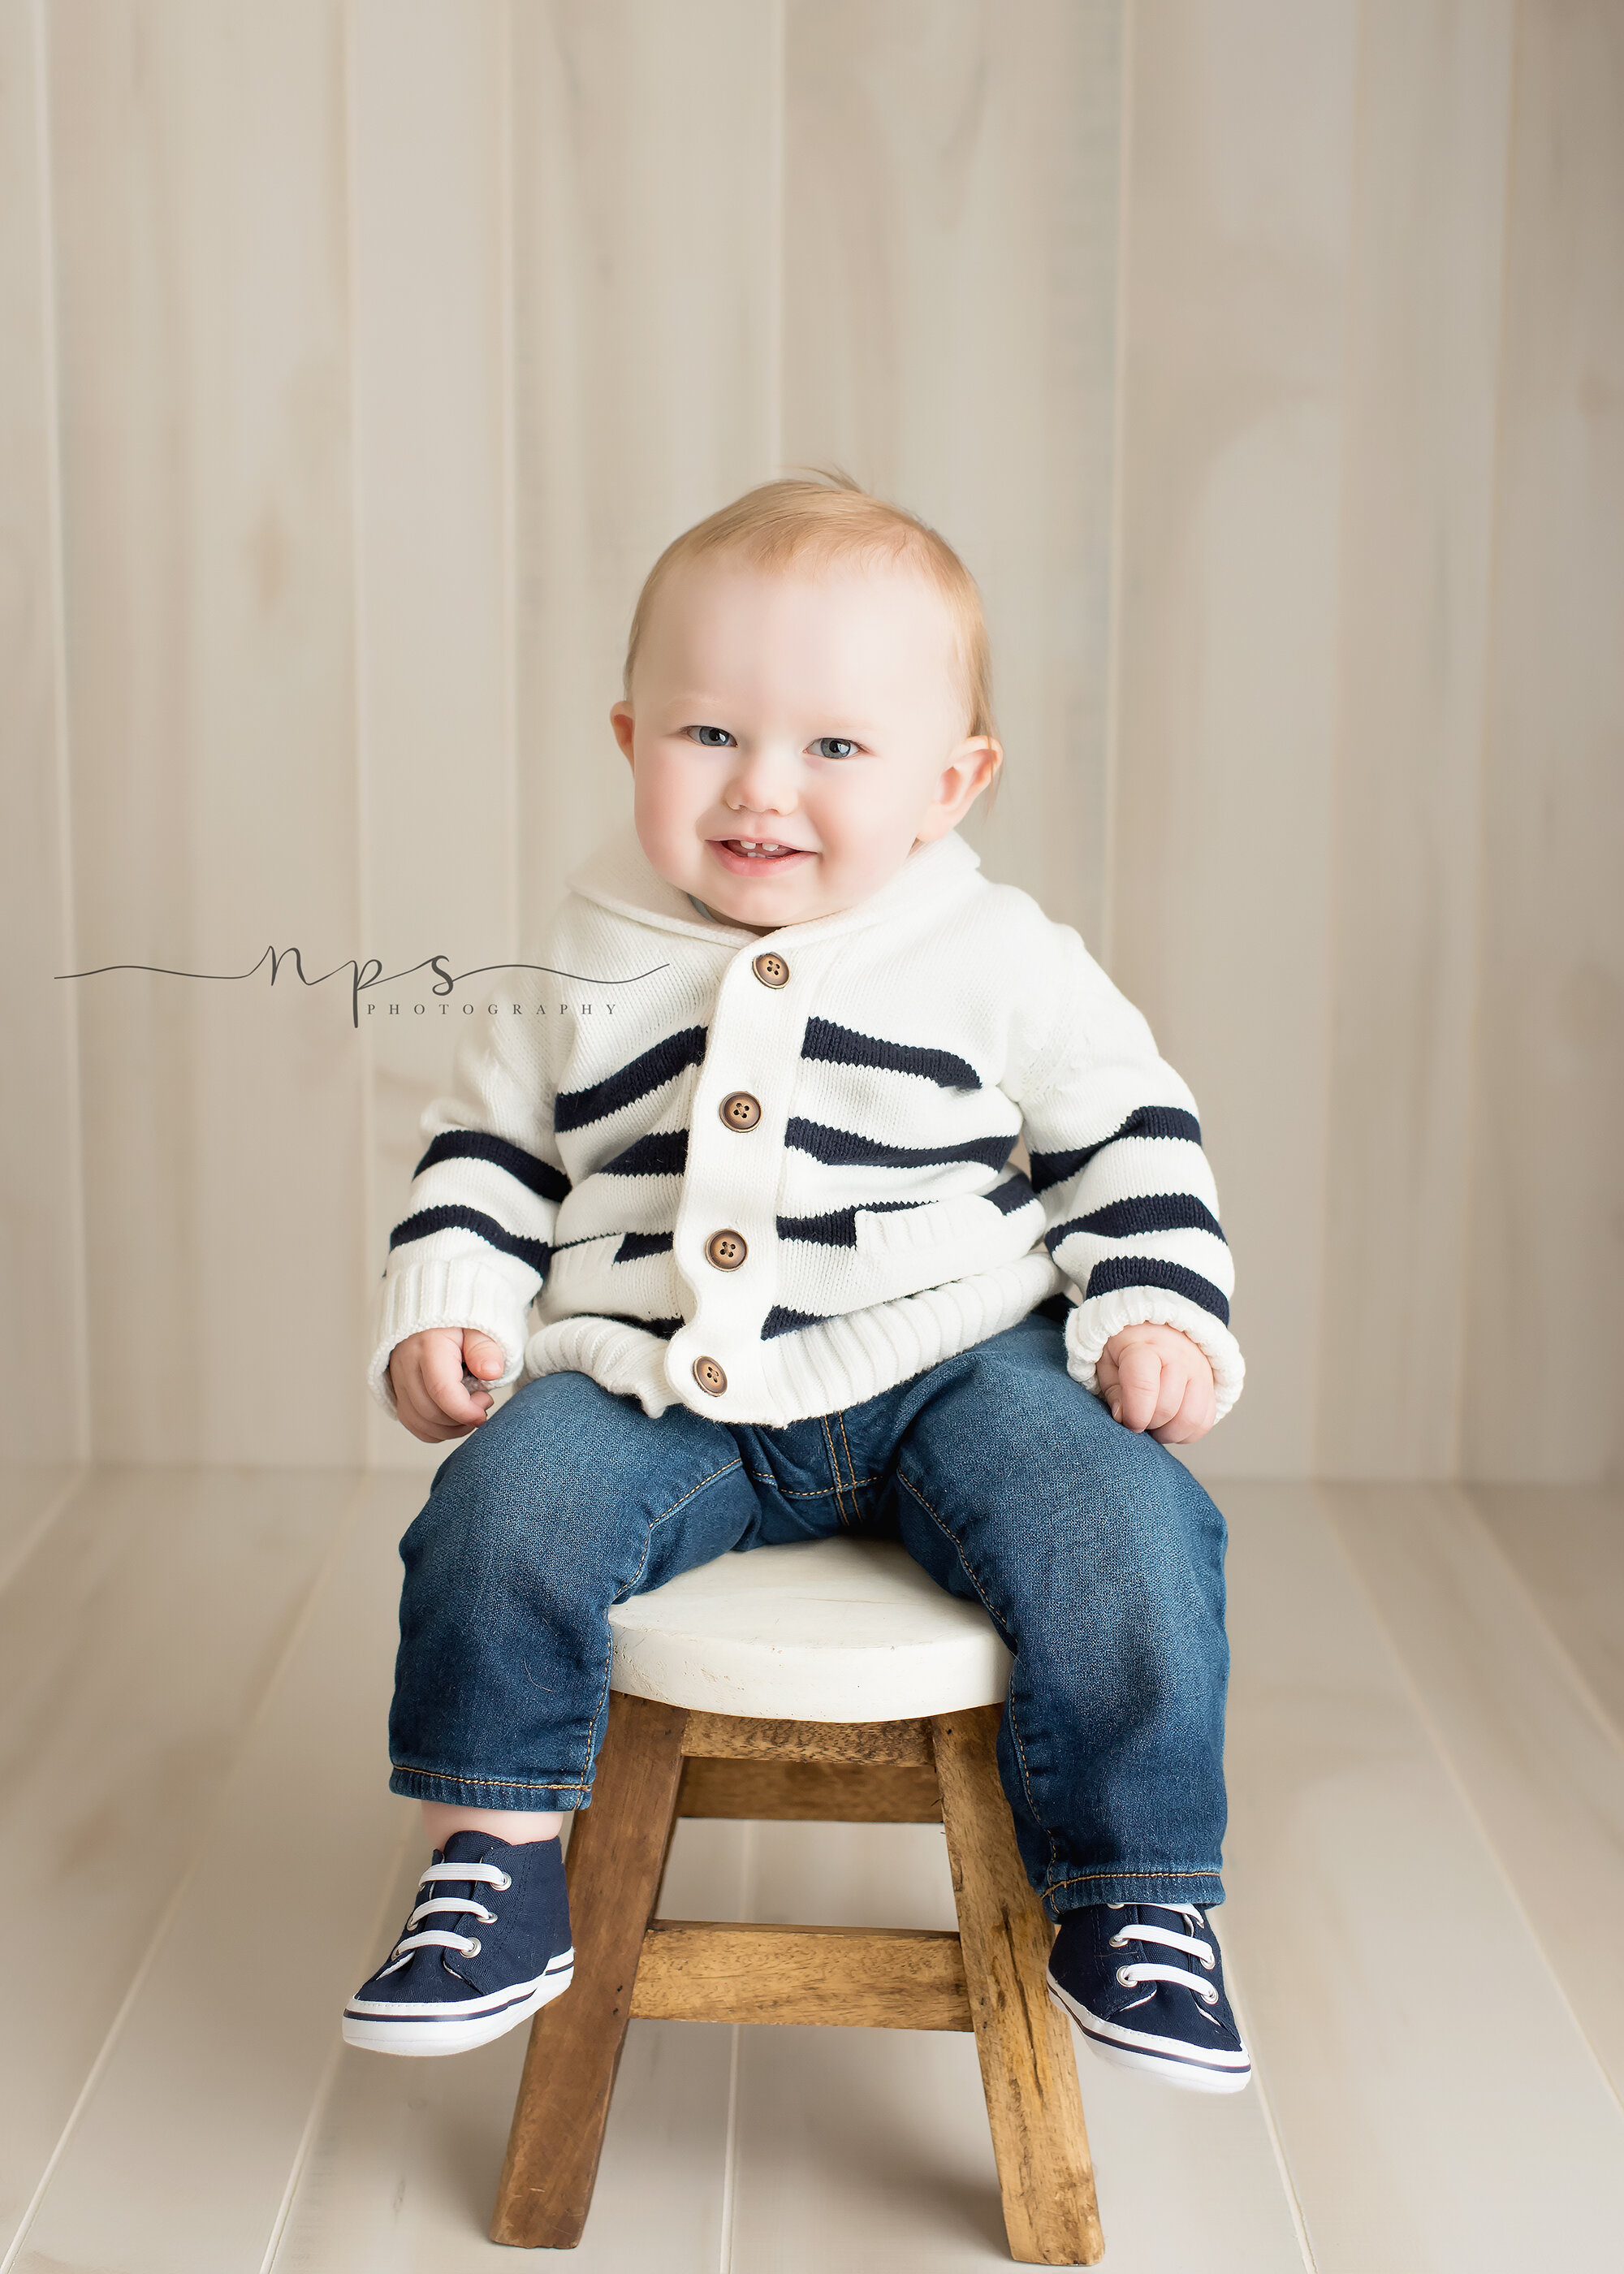 Pinehurst Baby Photographer 2 - NPS Photography